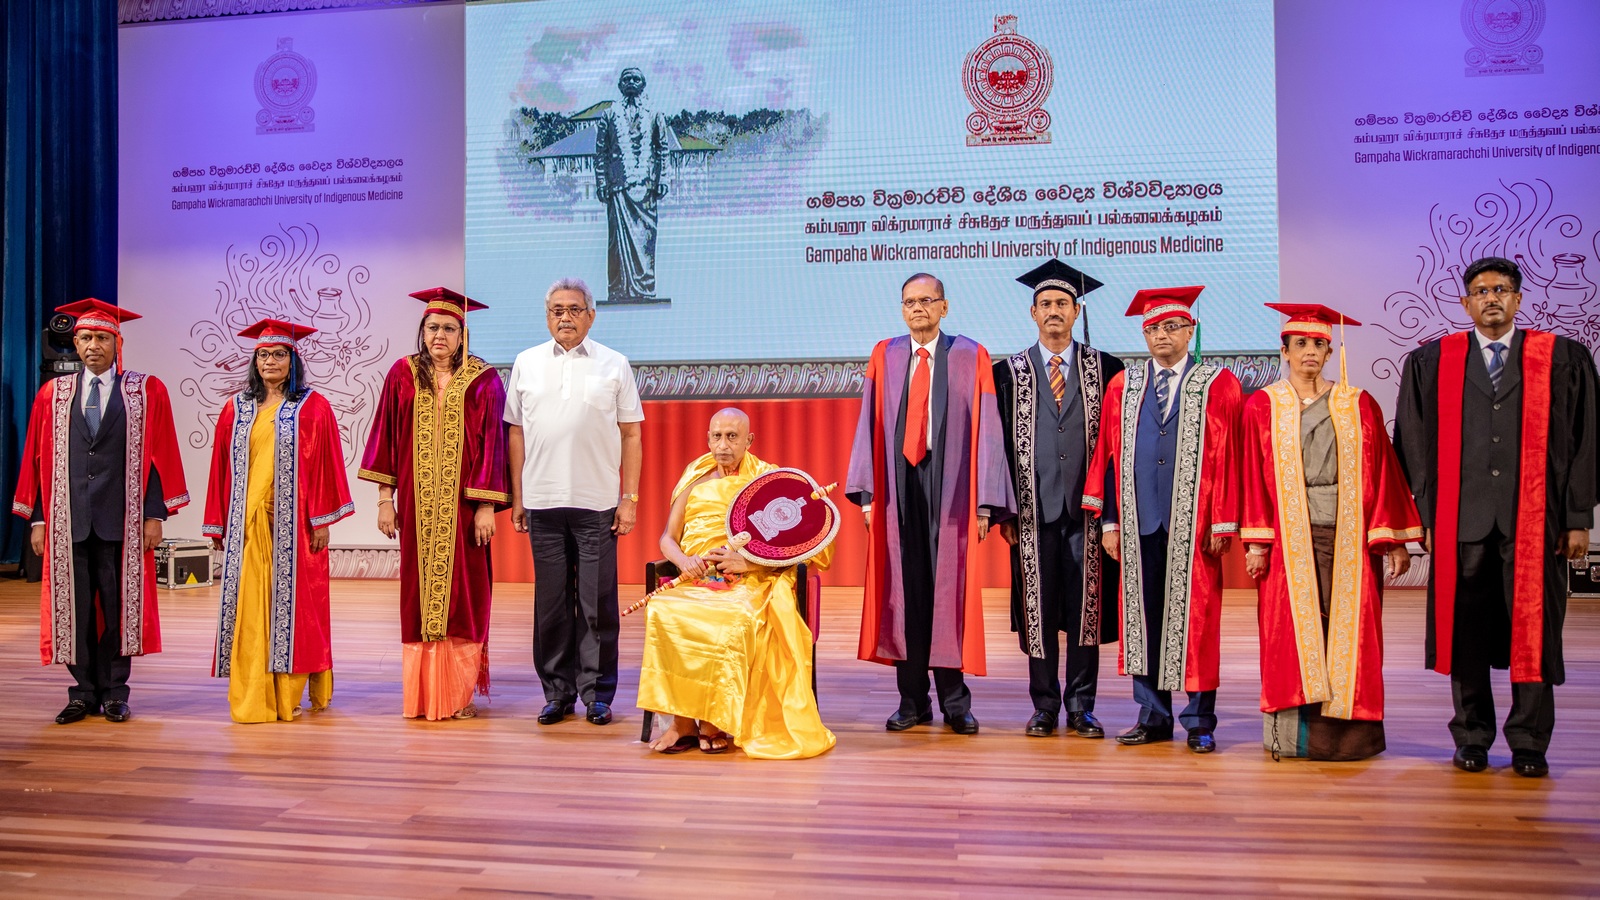 Gampaha Wickramarachchi University of Indigenous Medicine the 16th National University of Sri Lanka